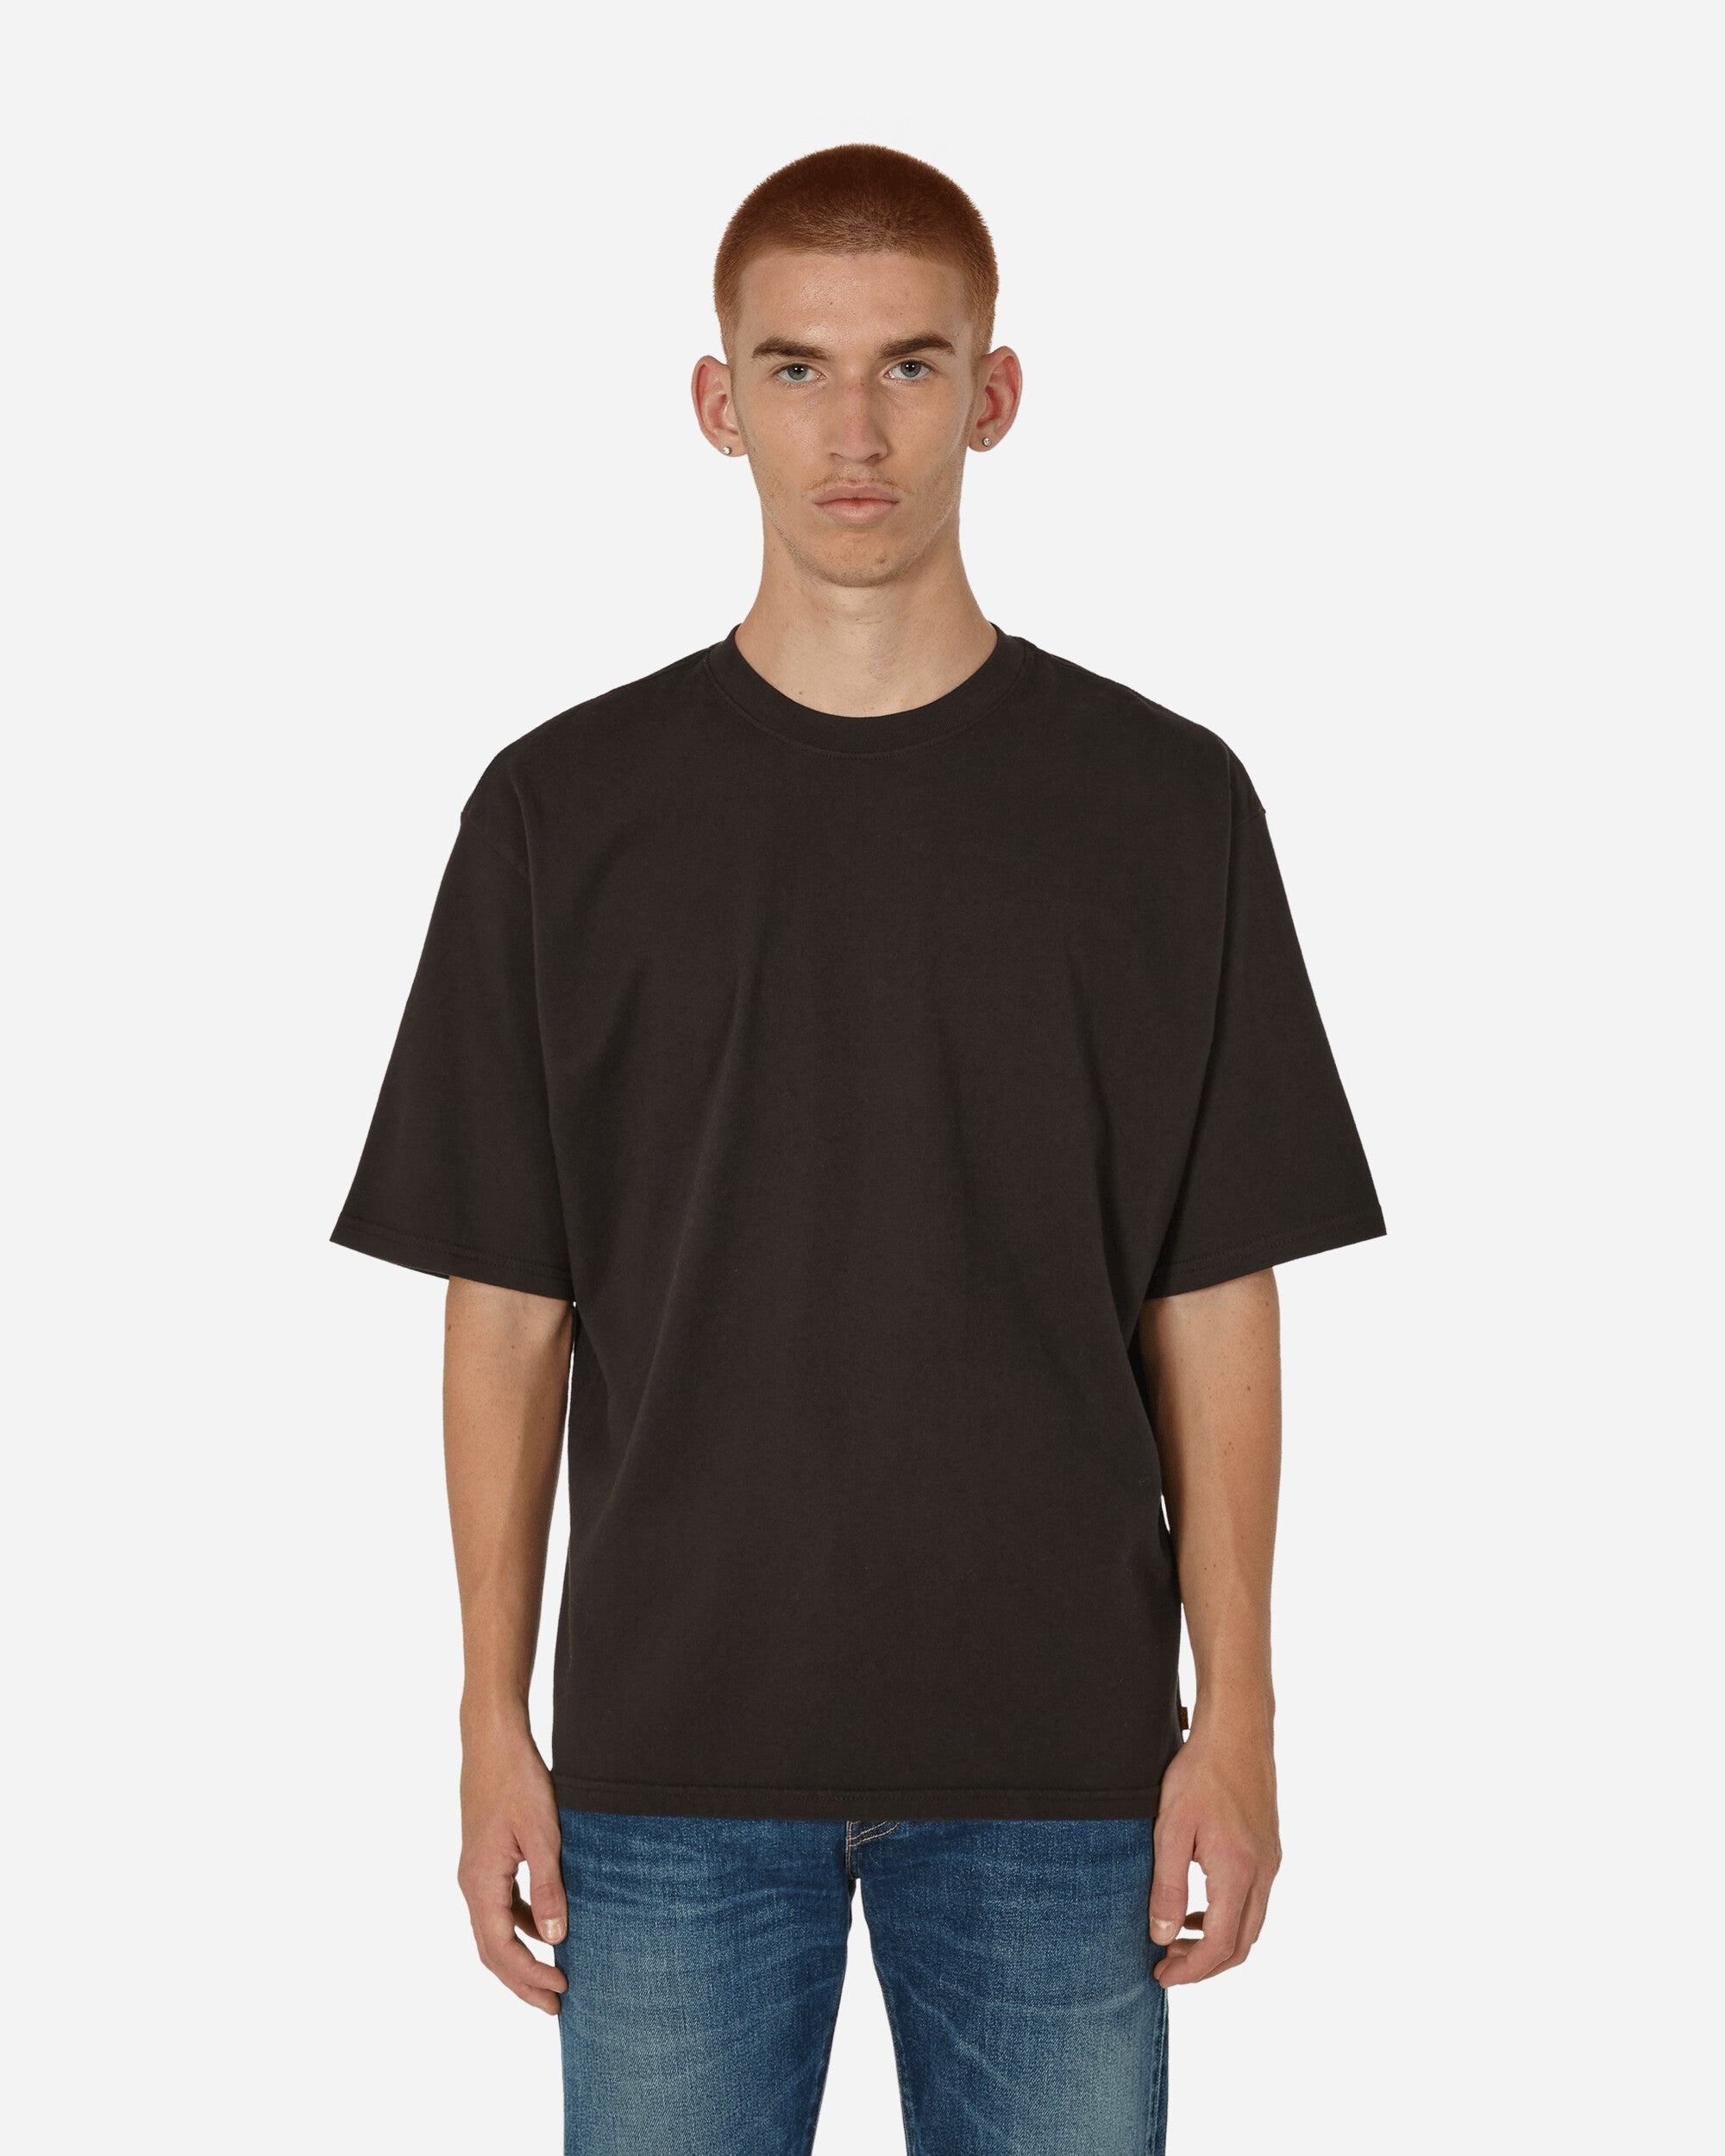 The Half Sleeve T-Shirt Black - 1